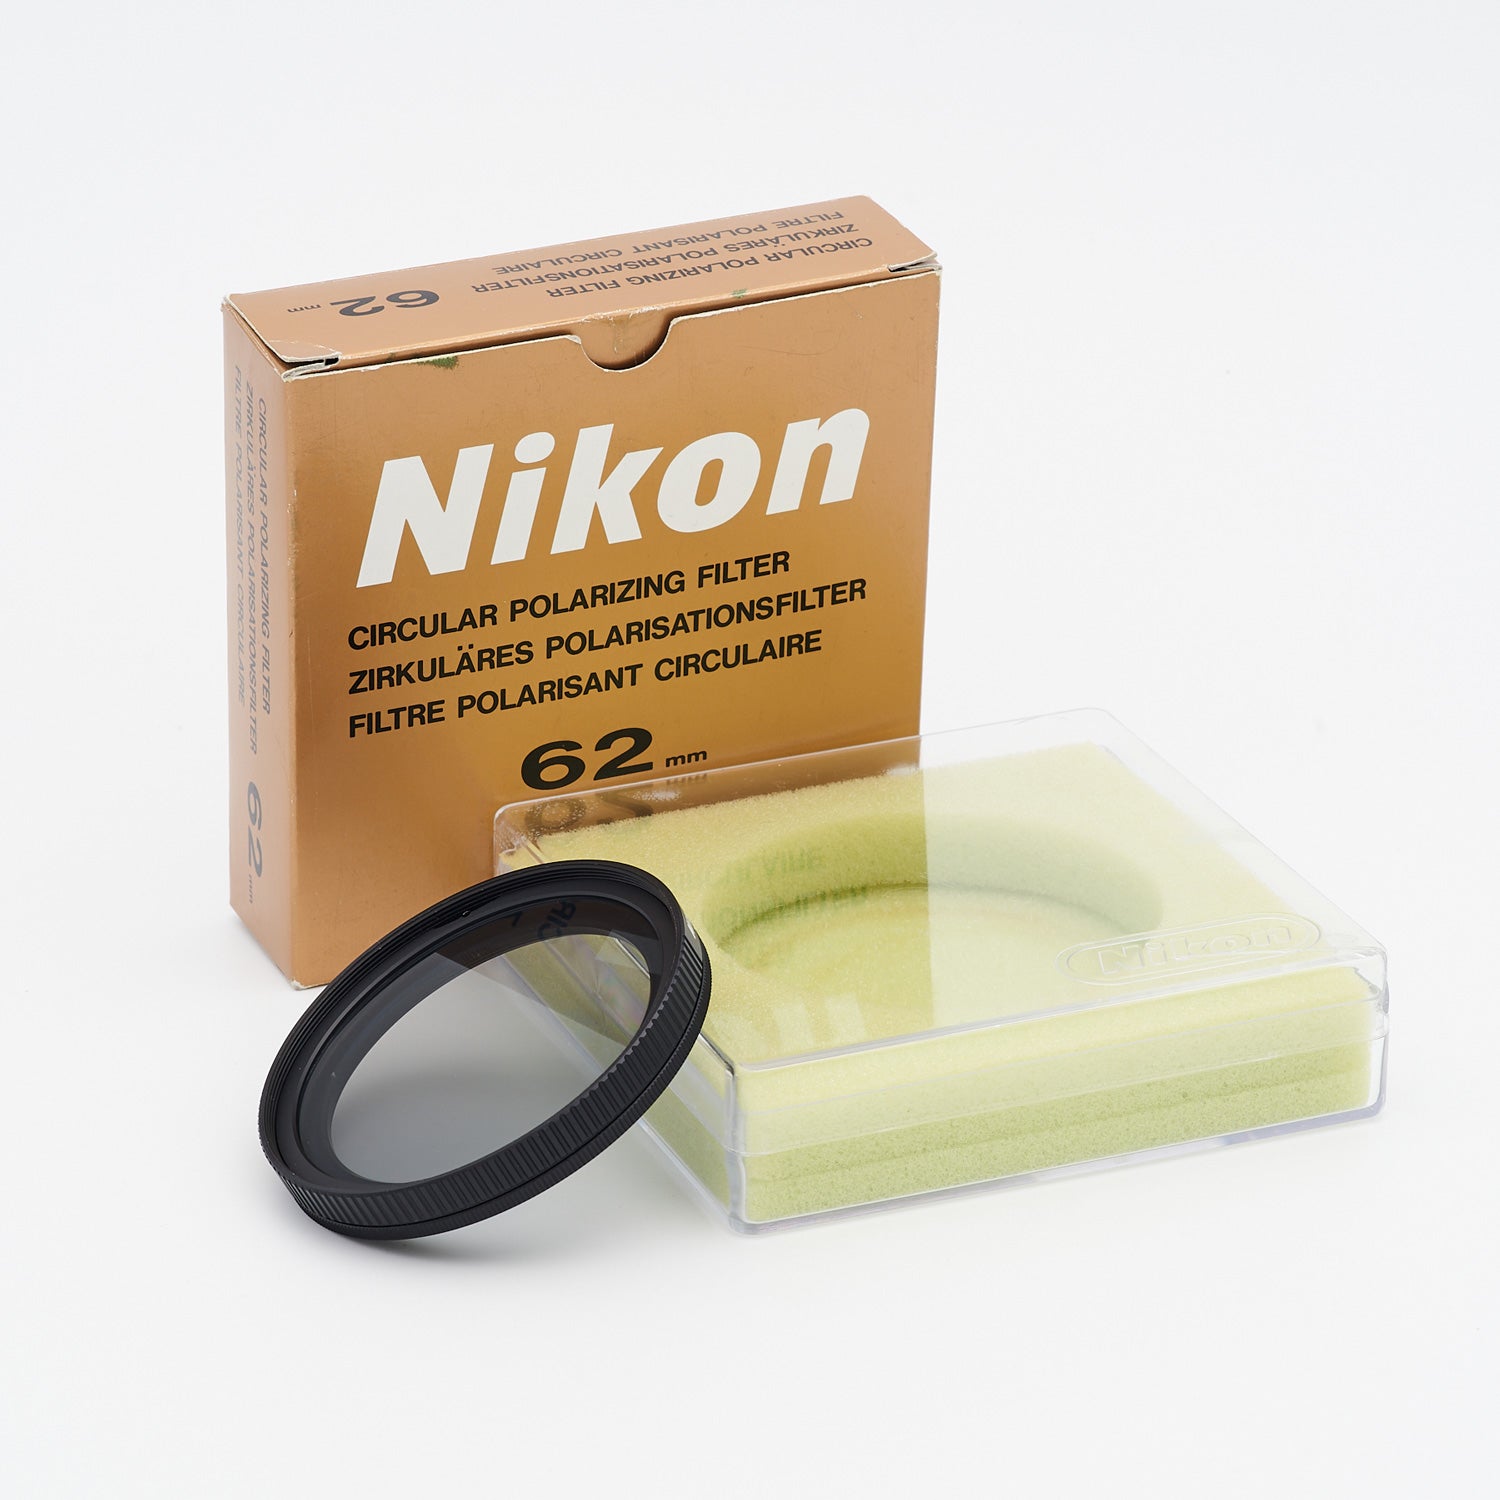 Nikon Circular Polarizing Filter (int. S/N 0035)